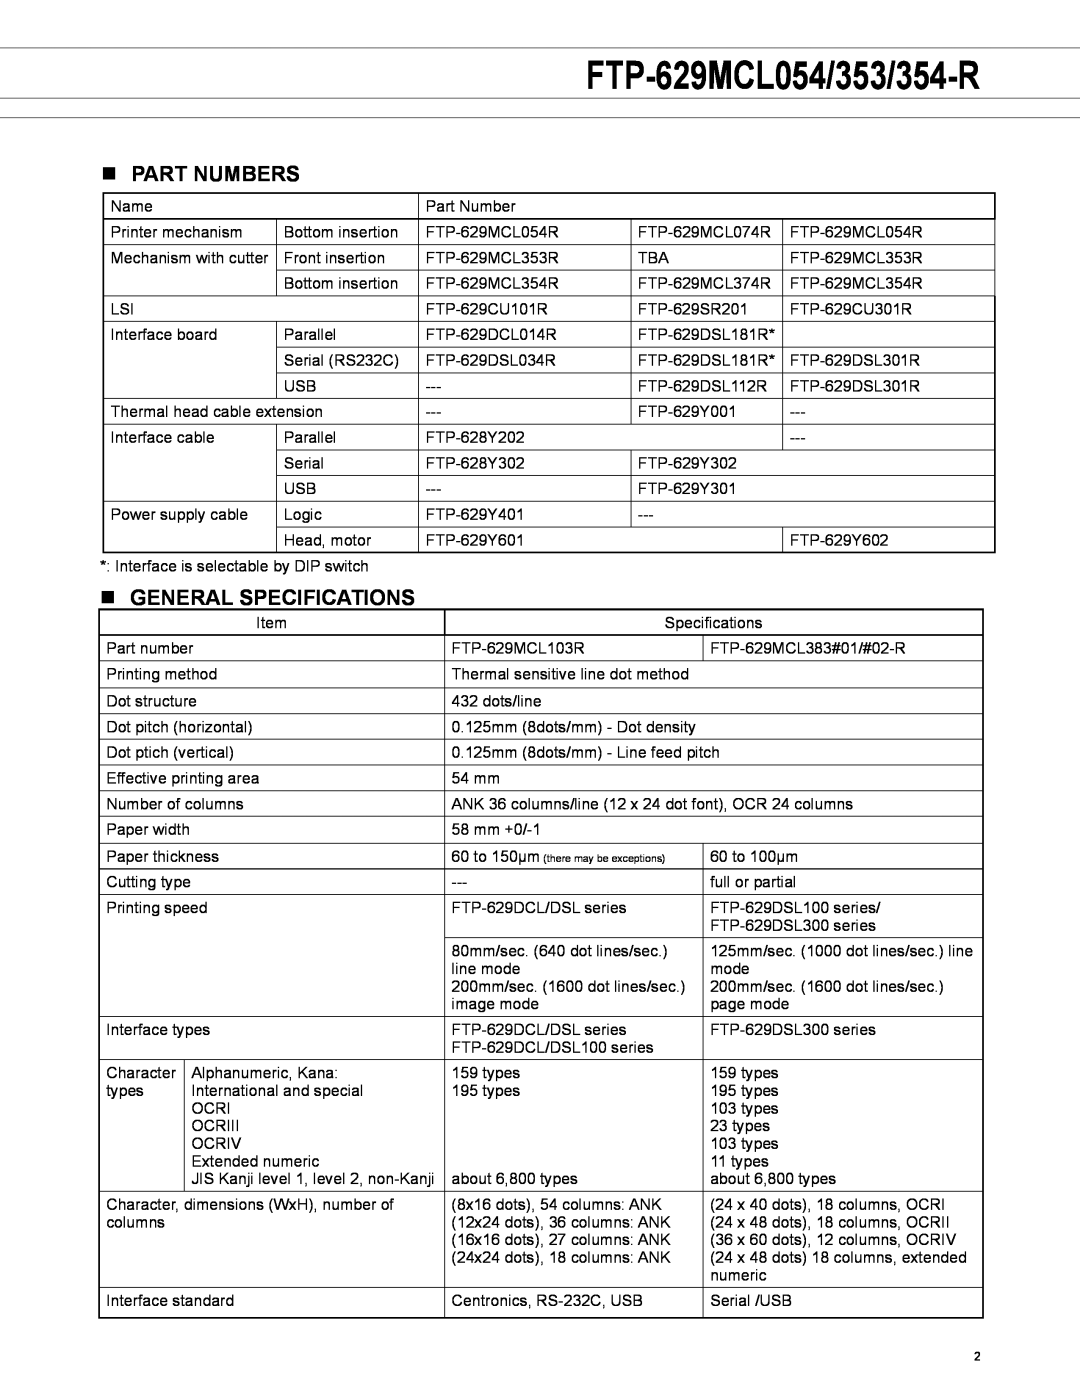 Fujitsu manual FTP-629MCL054/353/354-R, n part Numbers, n GENERAL SPECIFICATIONS 